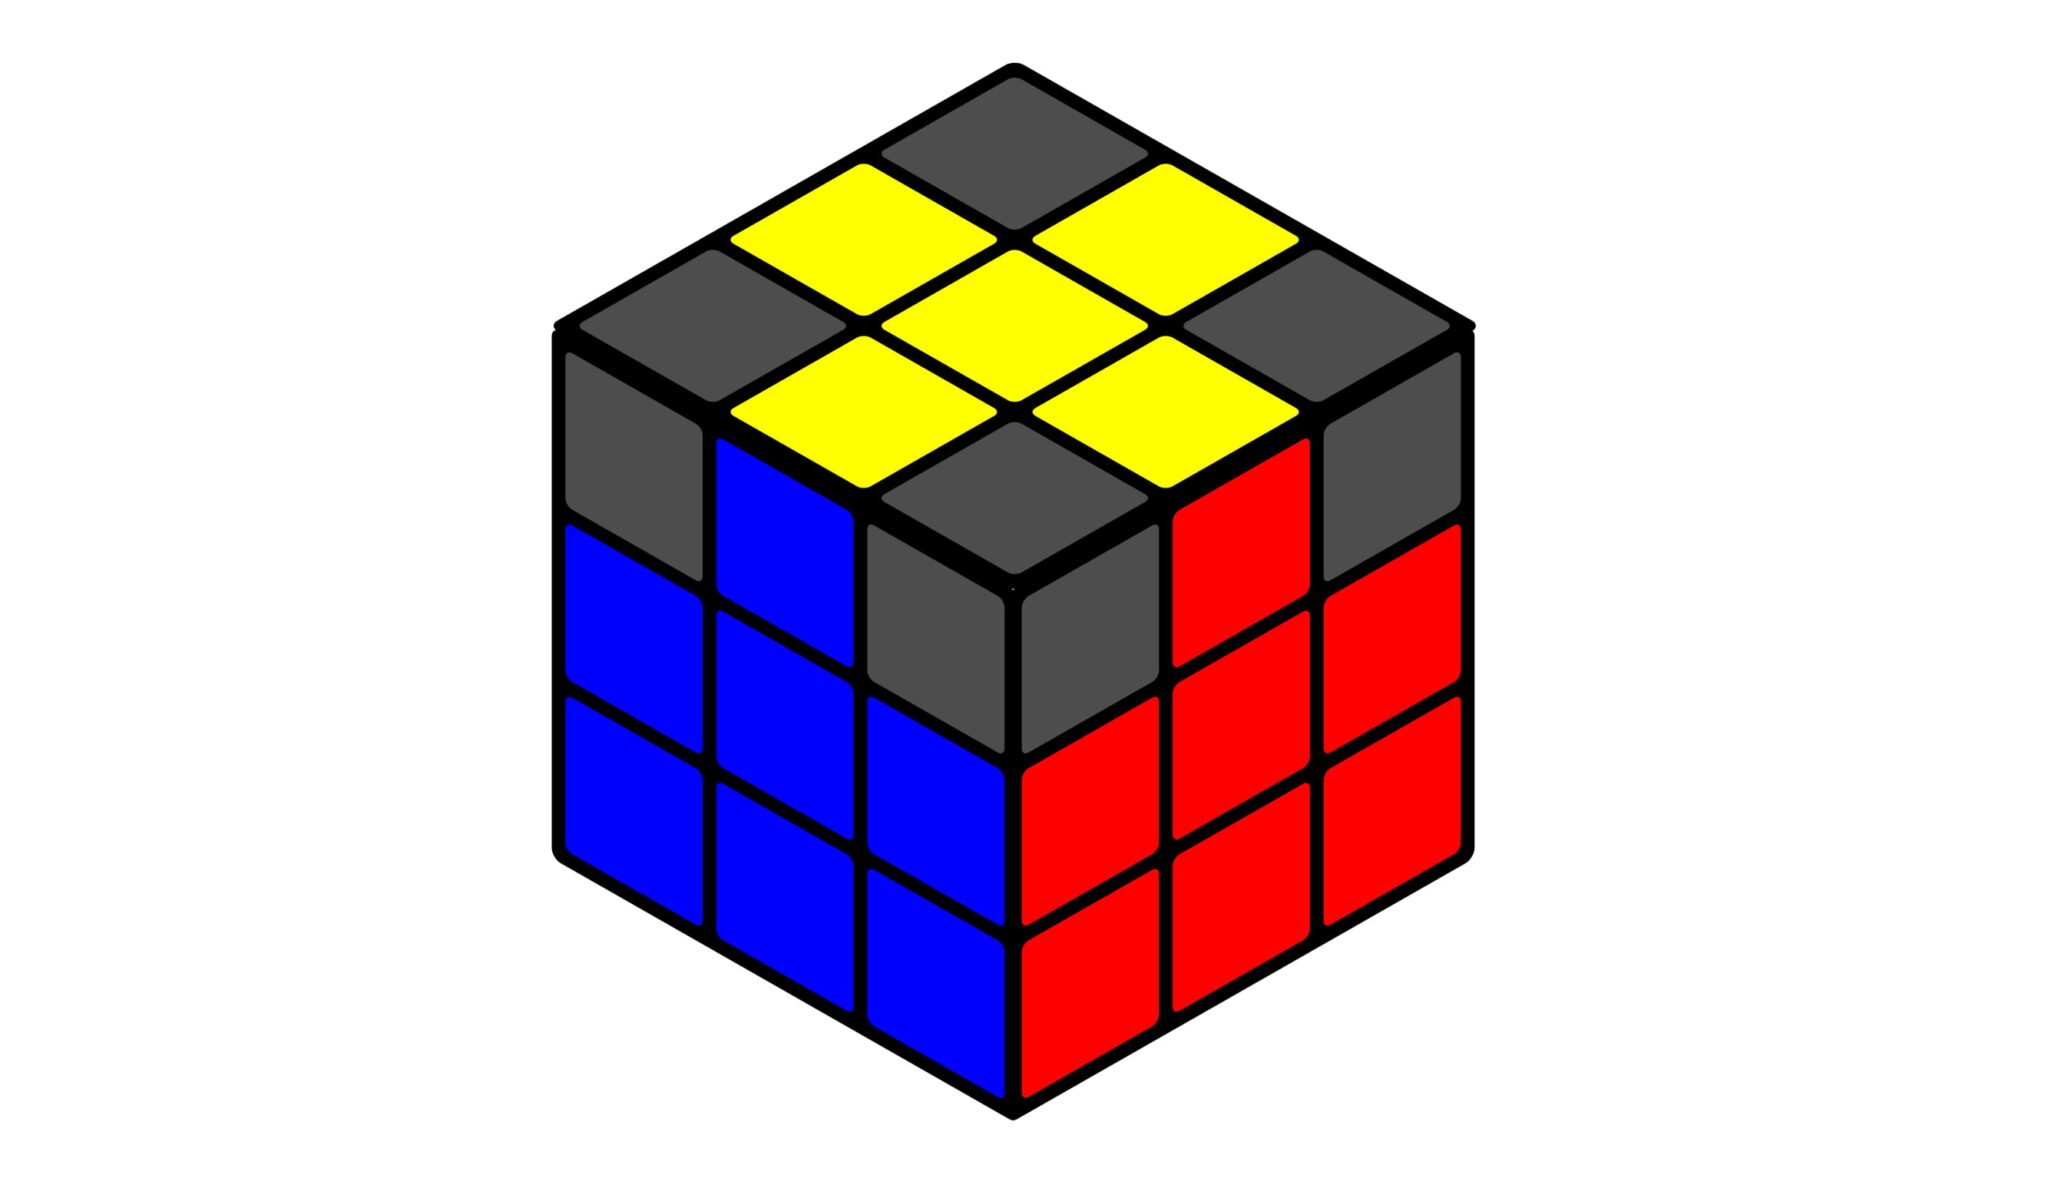 Сборка cube. Желтый крест кубик Рубика 3х3. Правильный крест кубик Рубика 3х3. Кубик рубик 3 на 3. Кубик Рубика желтый крест собрать.